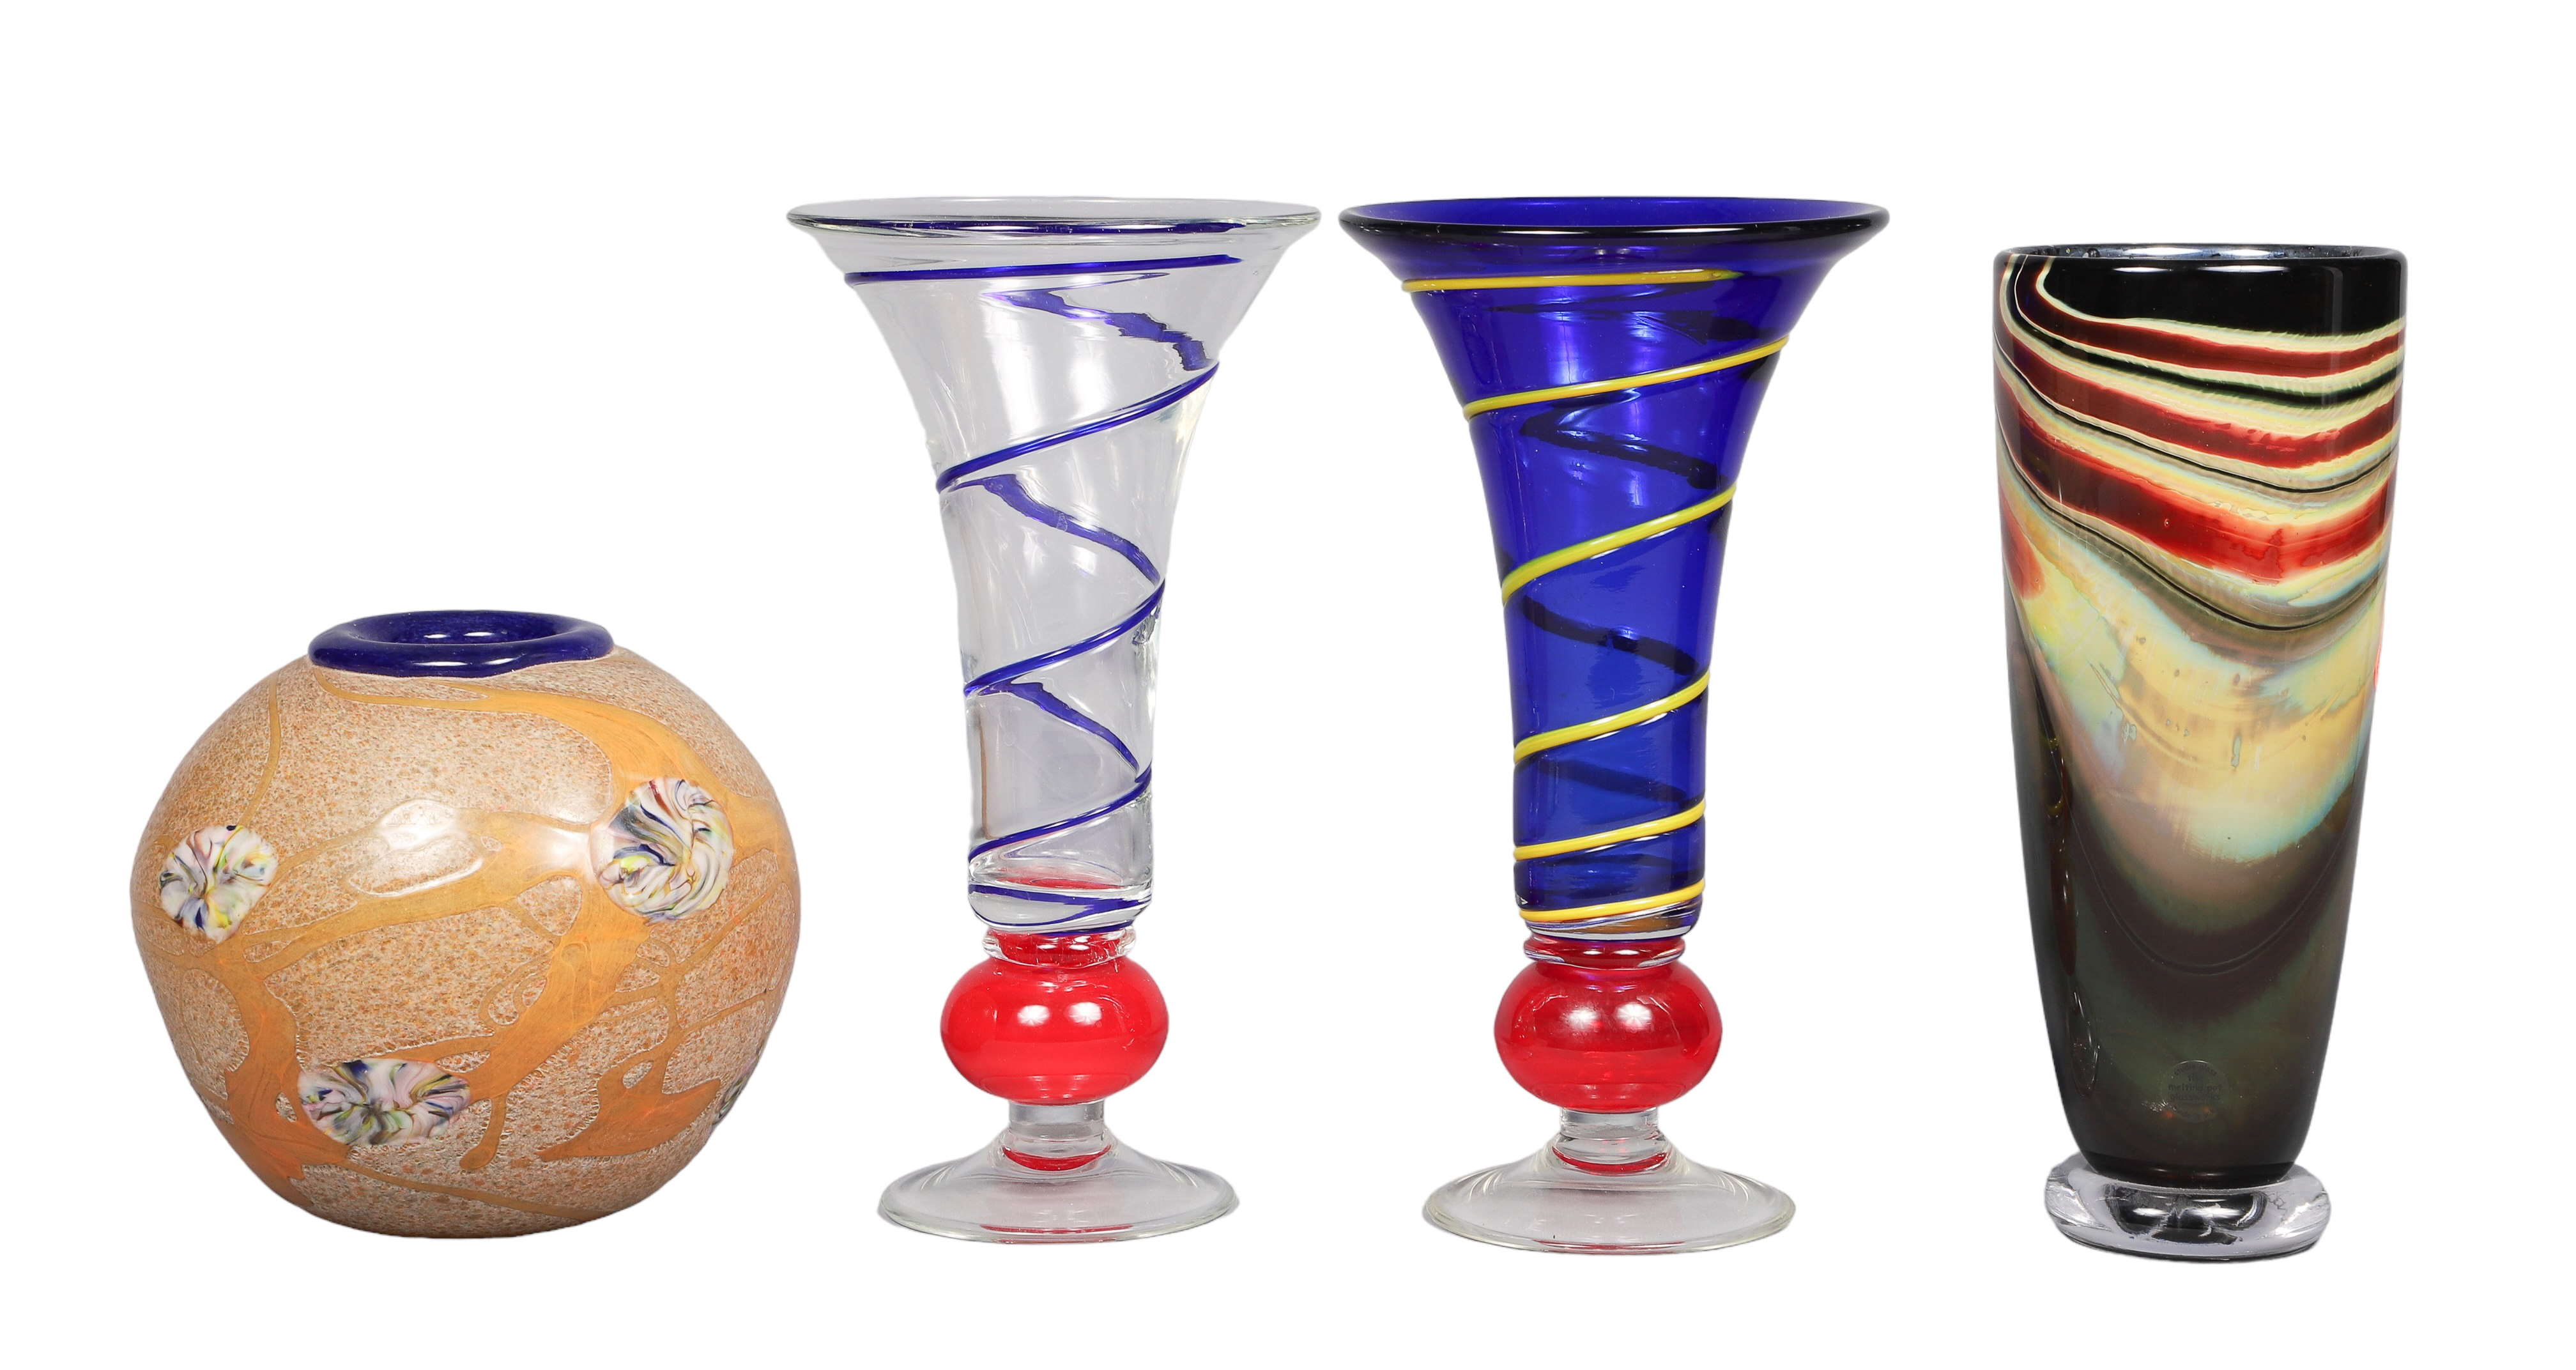  4 Art glass vases to include 2e1e2b